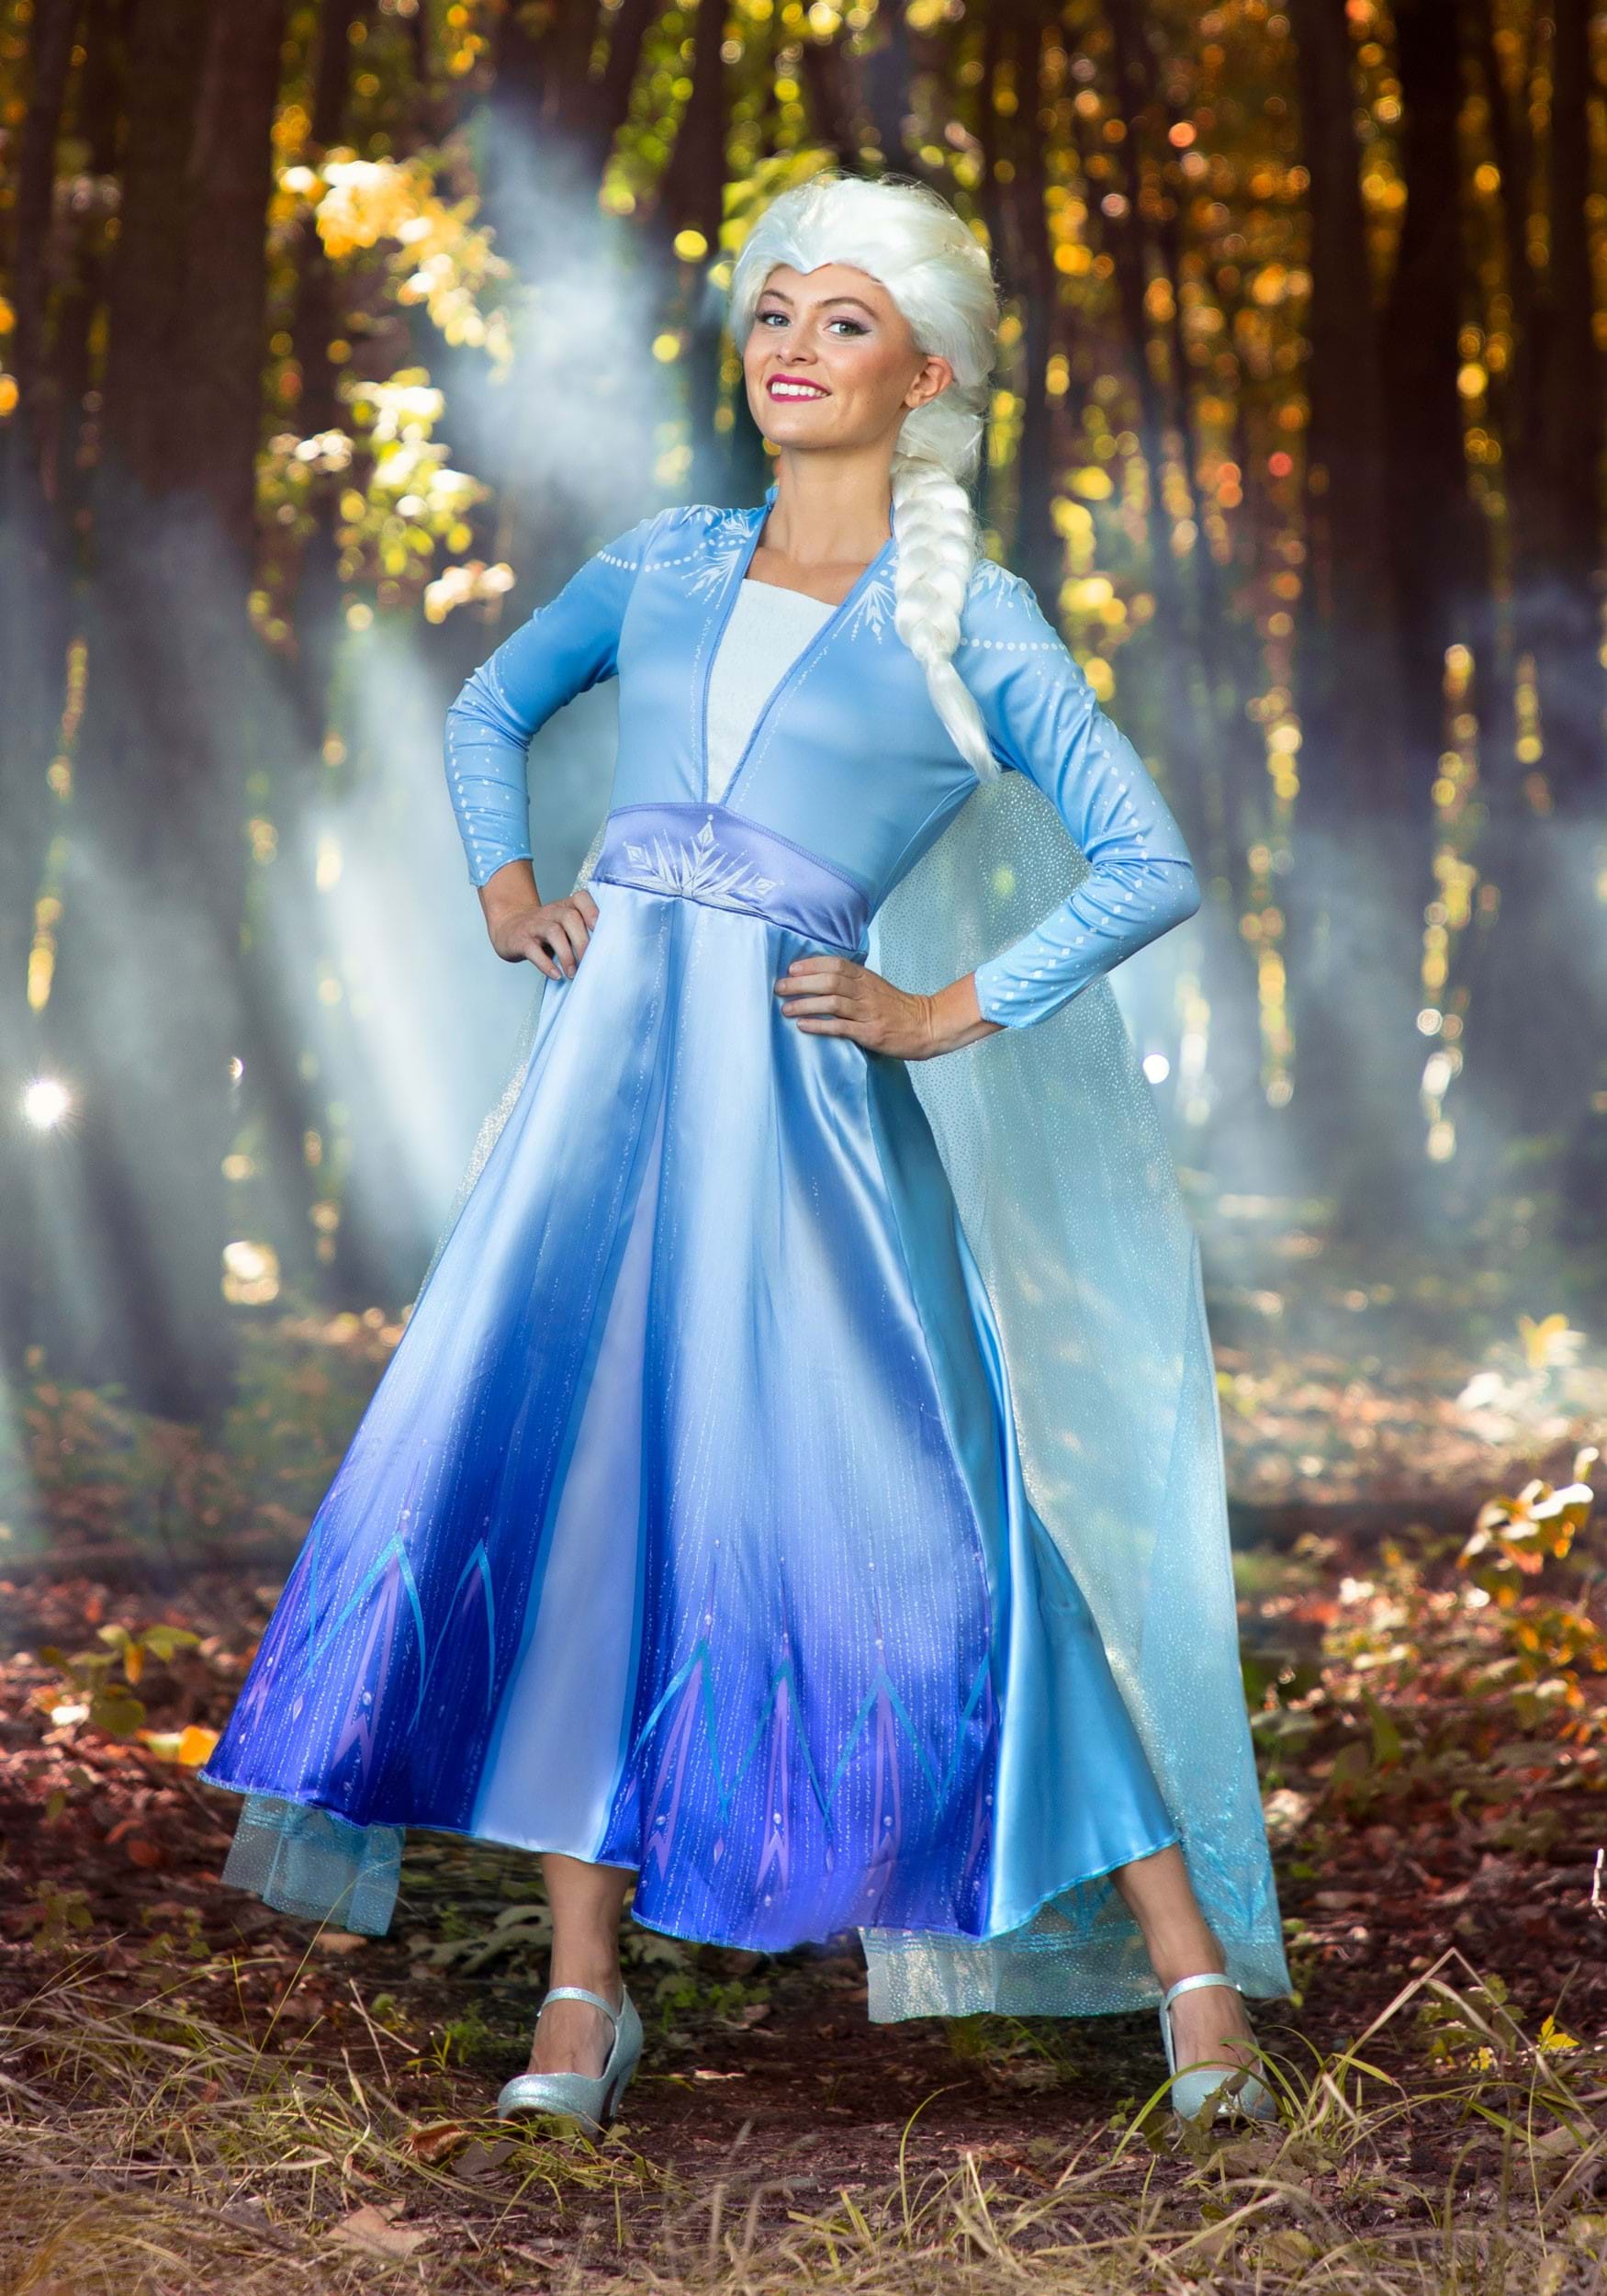 Details about   CK1569 Girls Classic Frozen 2 Elsa Disney Costume Cosplay Book Week Fancy Dress 